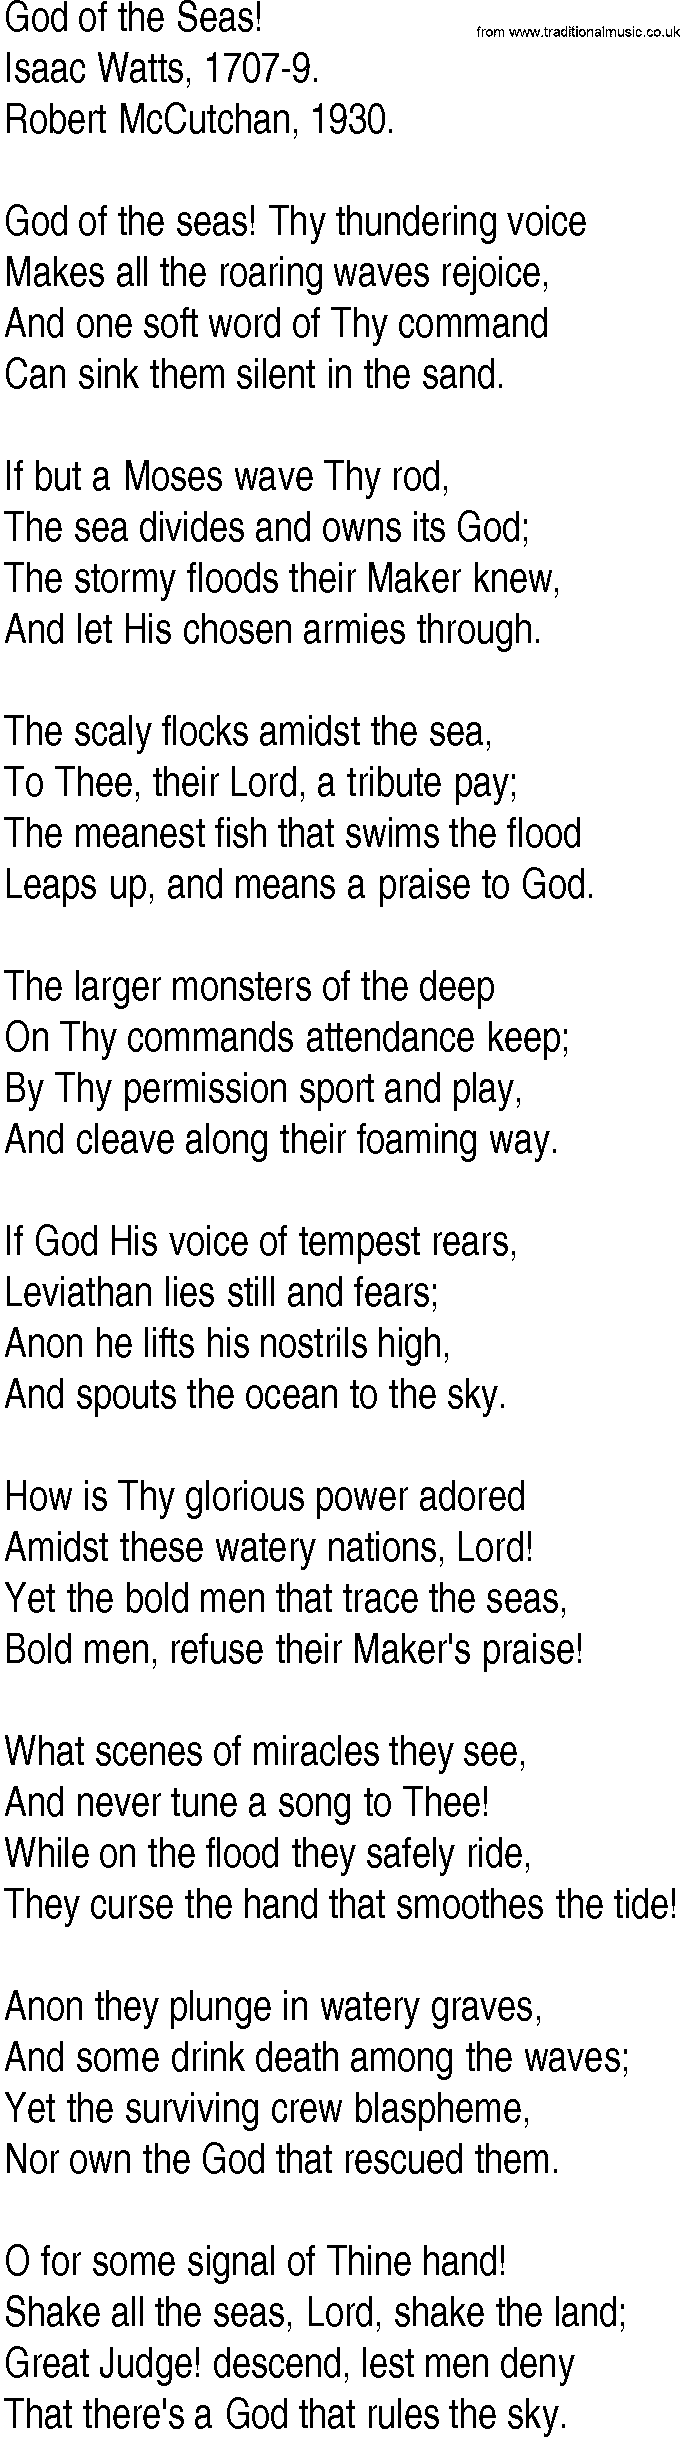 Hymn and Gospel Song: God of the Seas! by Isaac Watts lyrics